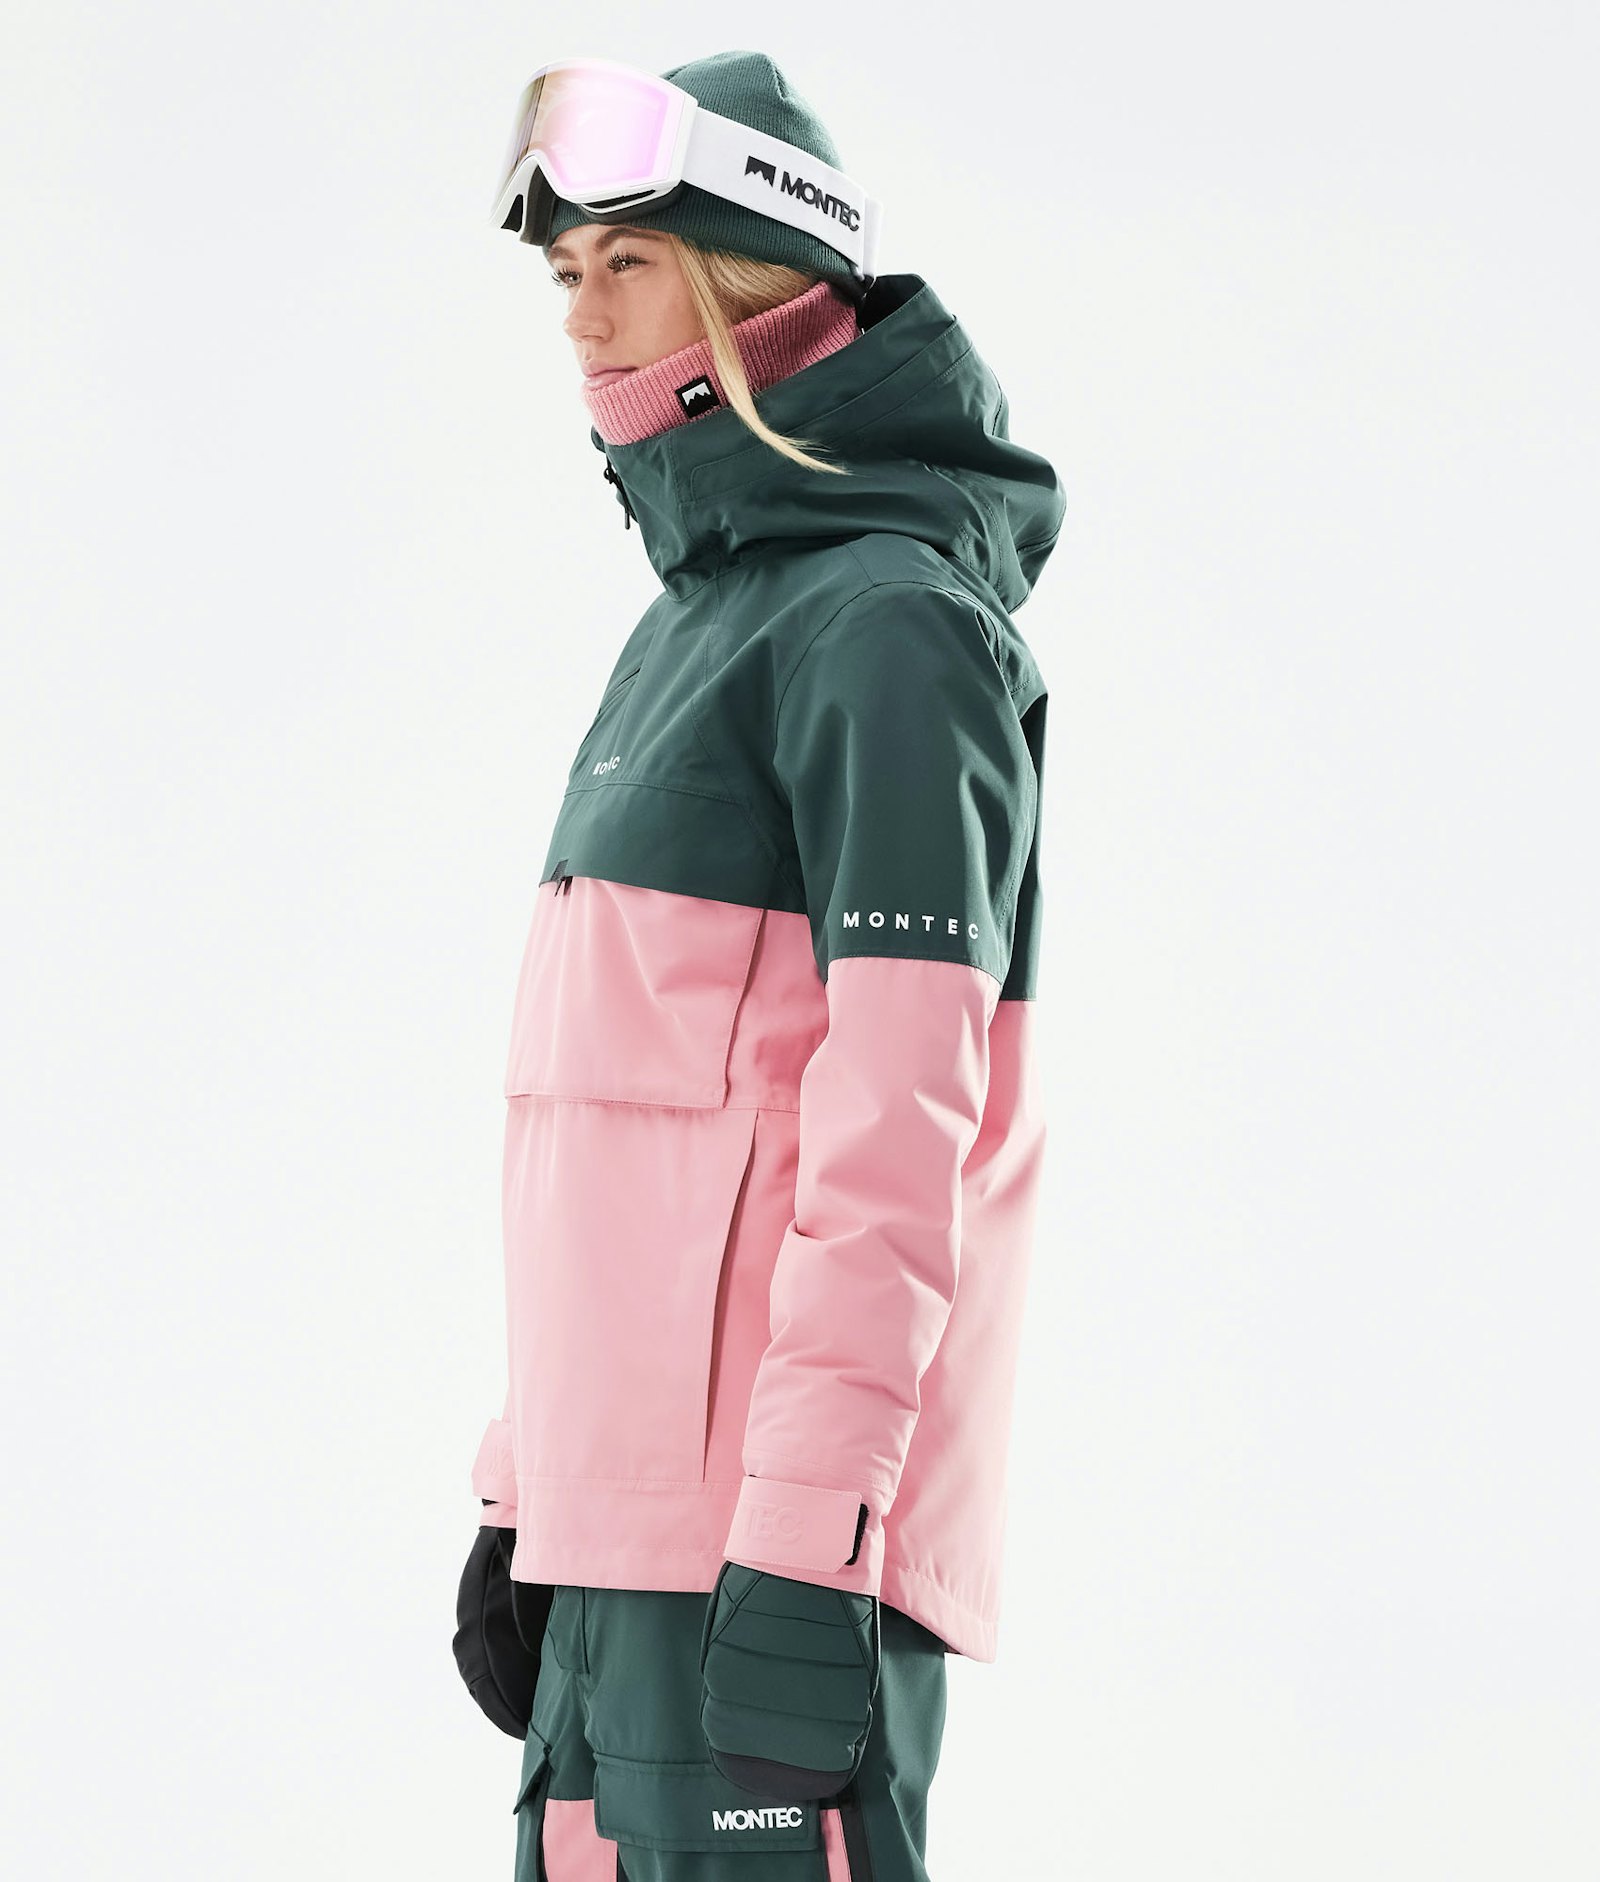 Dune W 2021 Snowboard Jacket Women Dark Atlantic/Pink